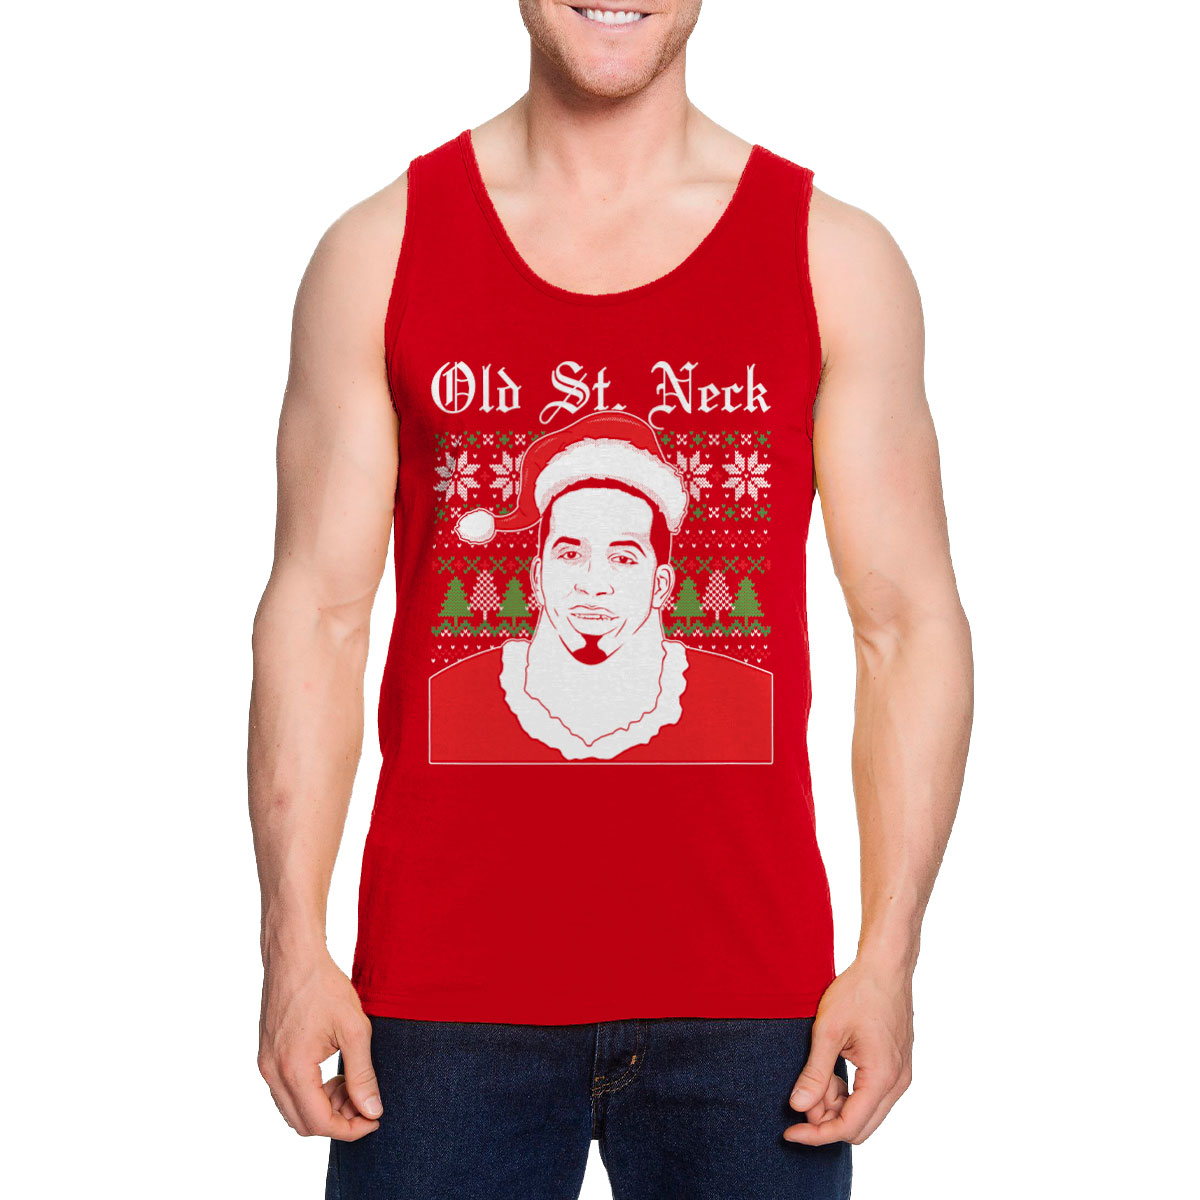 Old St Neck Funny Meme Ugly Christmas Sweater Men's Tank ...